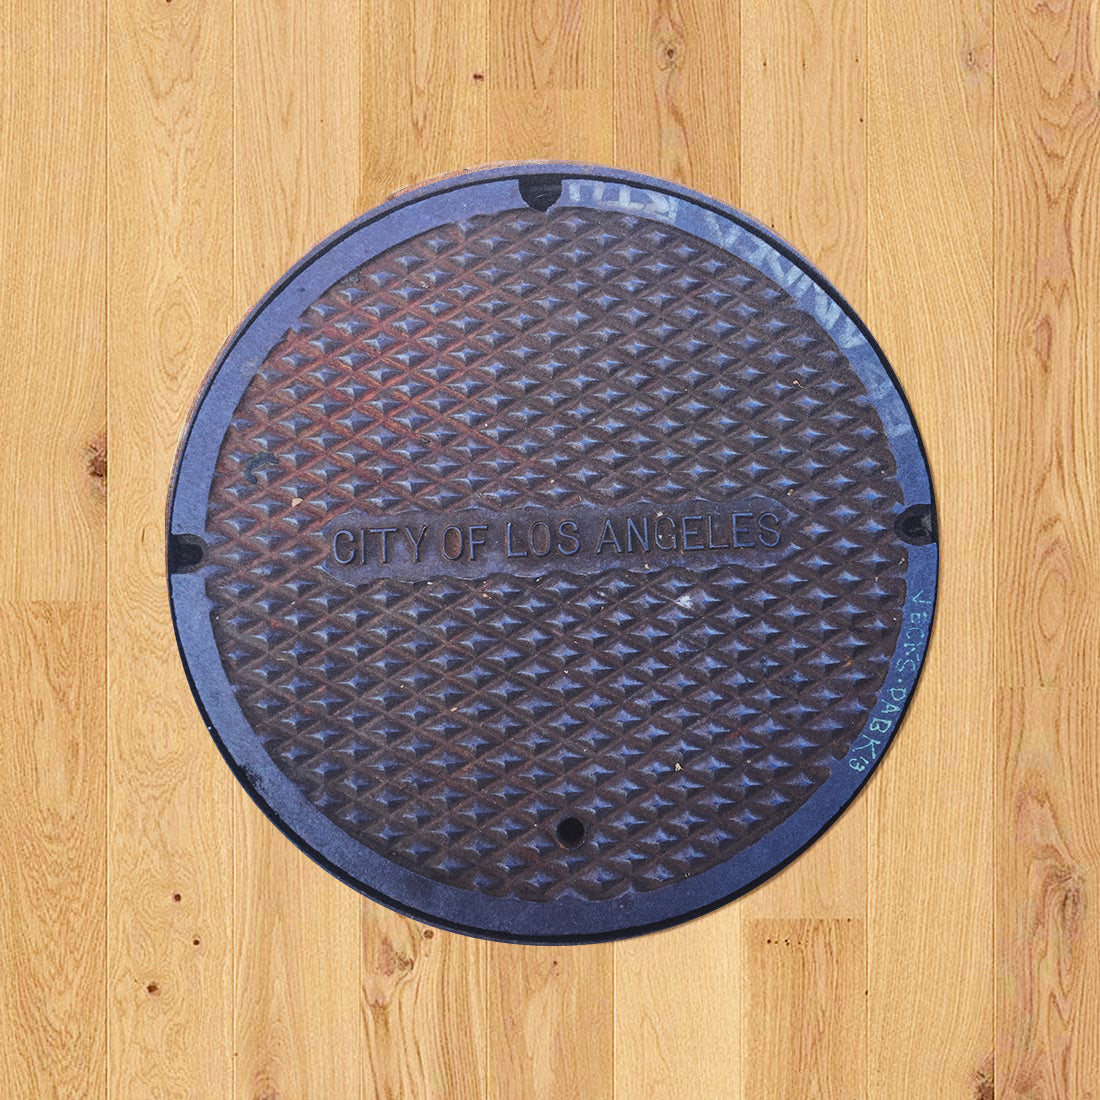 CALIFORNIA SERIES - Sewer Cover Doormat, Trivet, Coaster - Los Angeles, CA